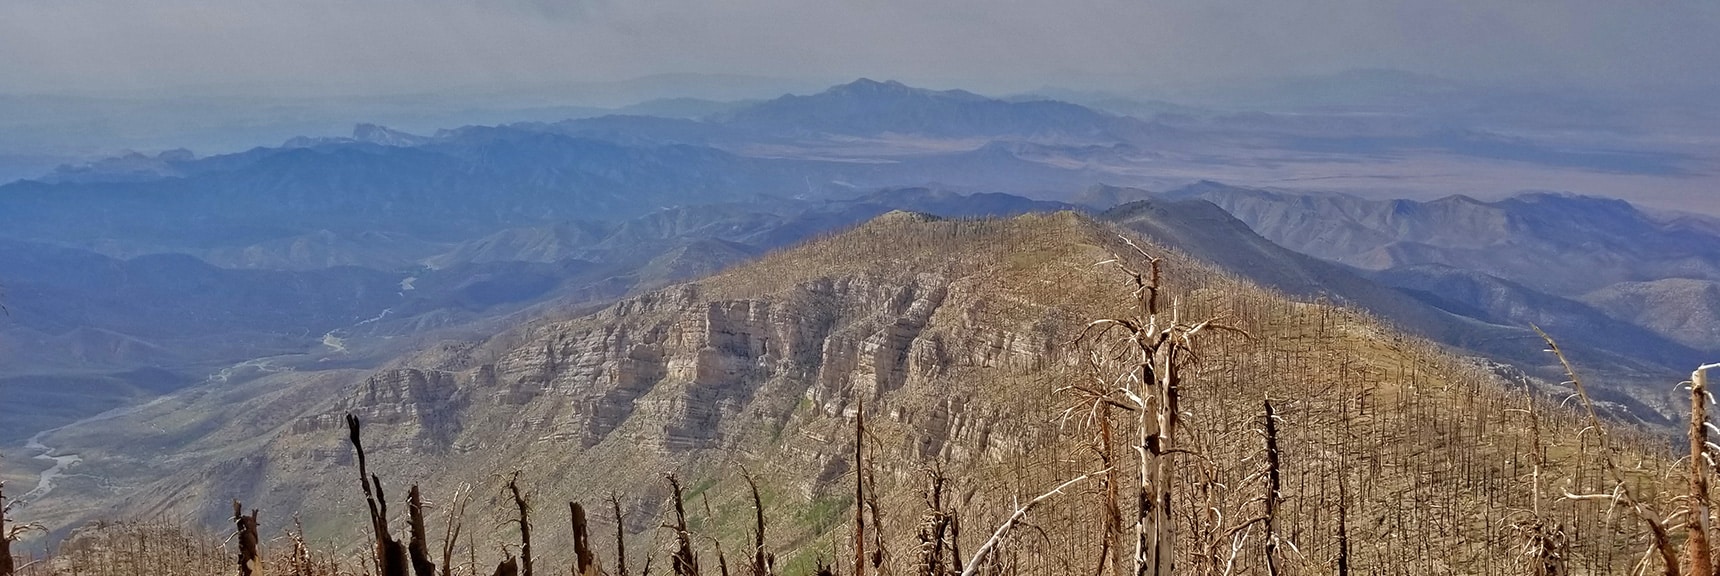 No Sign of New Bristlecone Pine Tree Regrowth on Sexton Ridge | Sexton Ridge Descent from Griffith Peak, Mt. Charleston Wilderness, Spring Mountains, Nevada